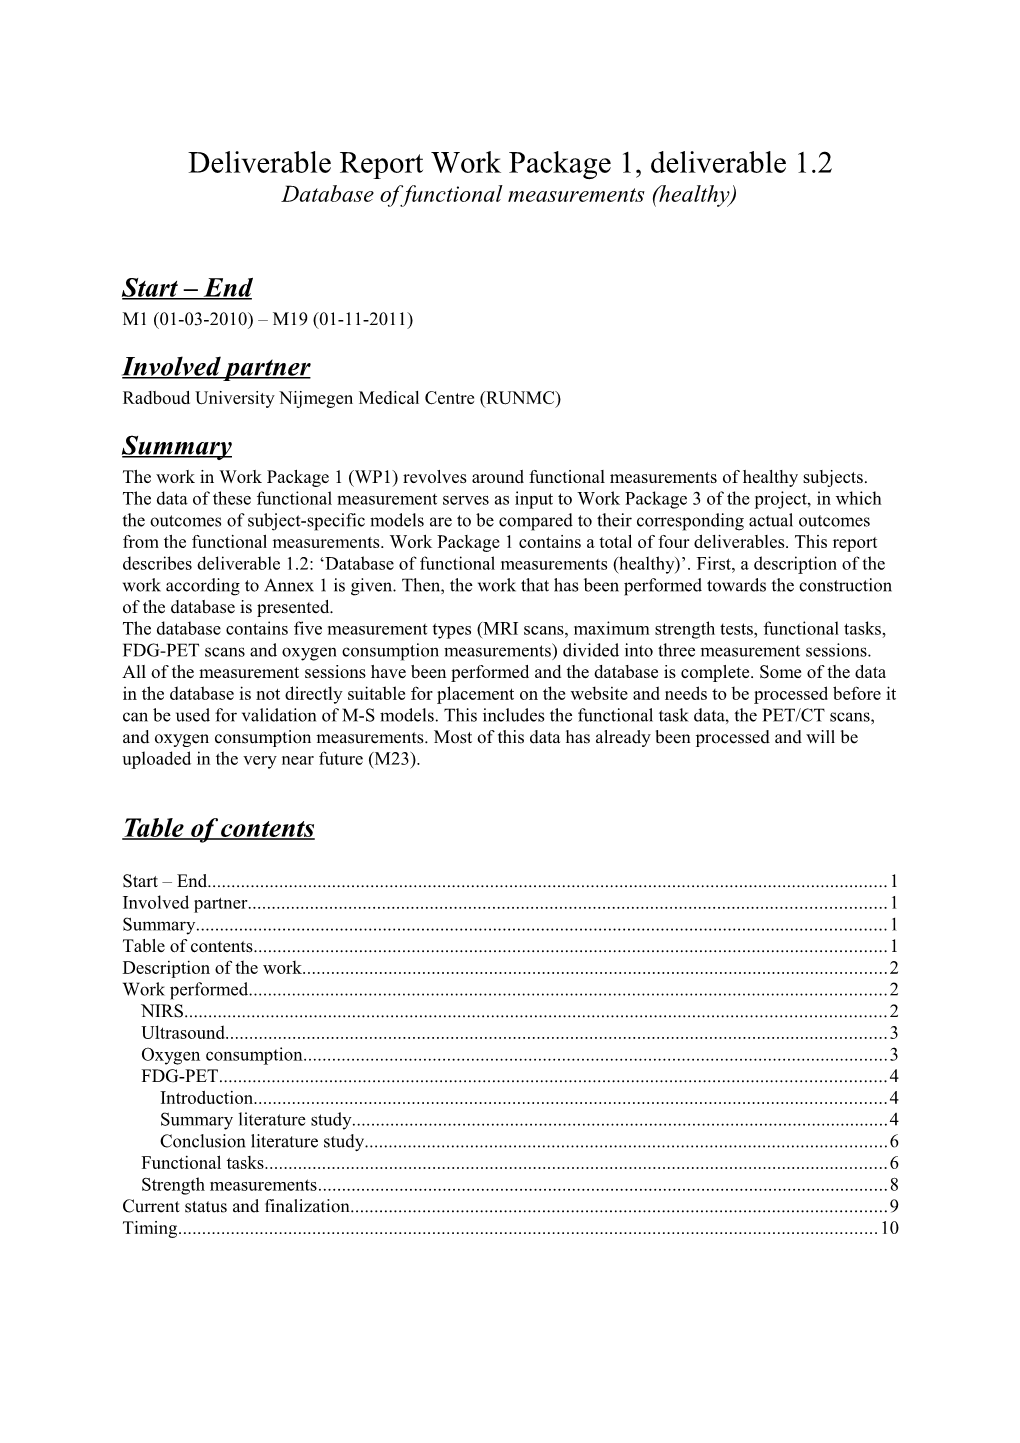 Tlemsafe Project Deliverable Report 1.2: Functional Measurements (Healthy)